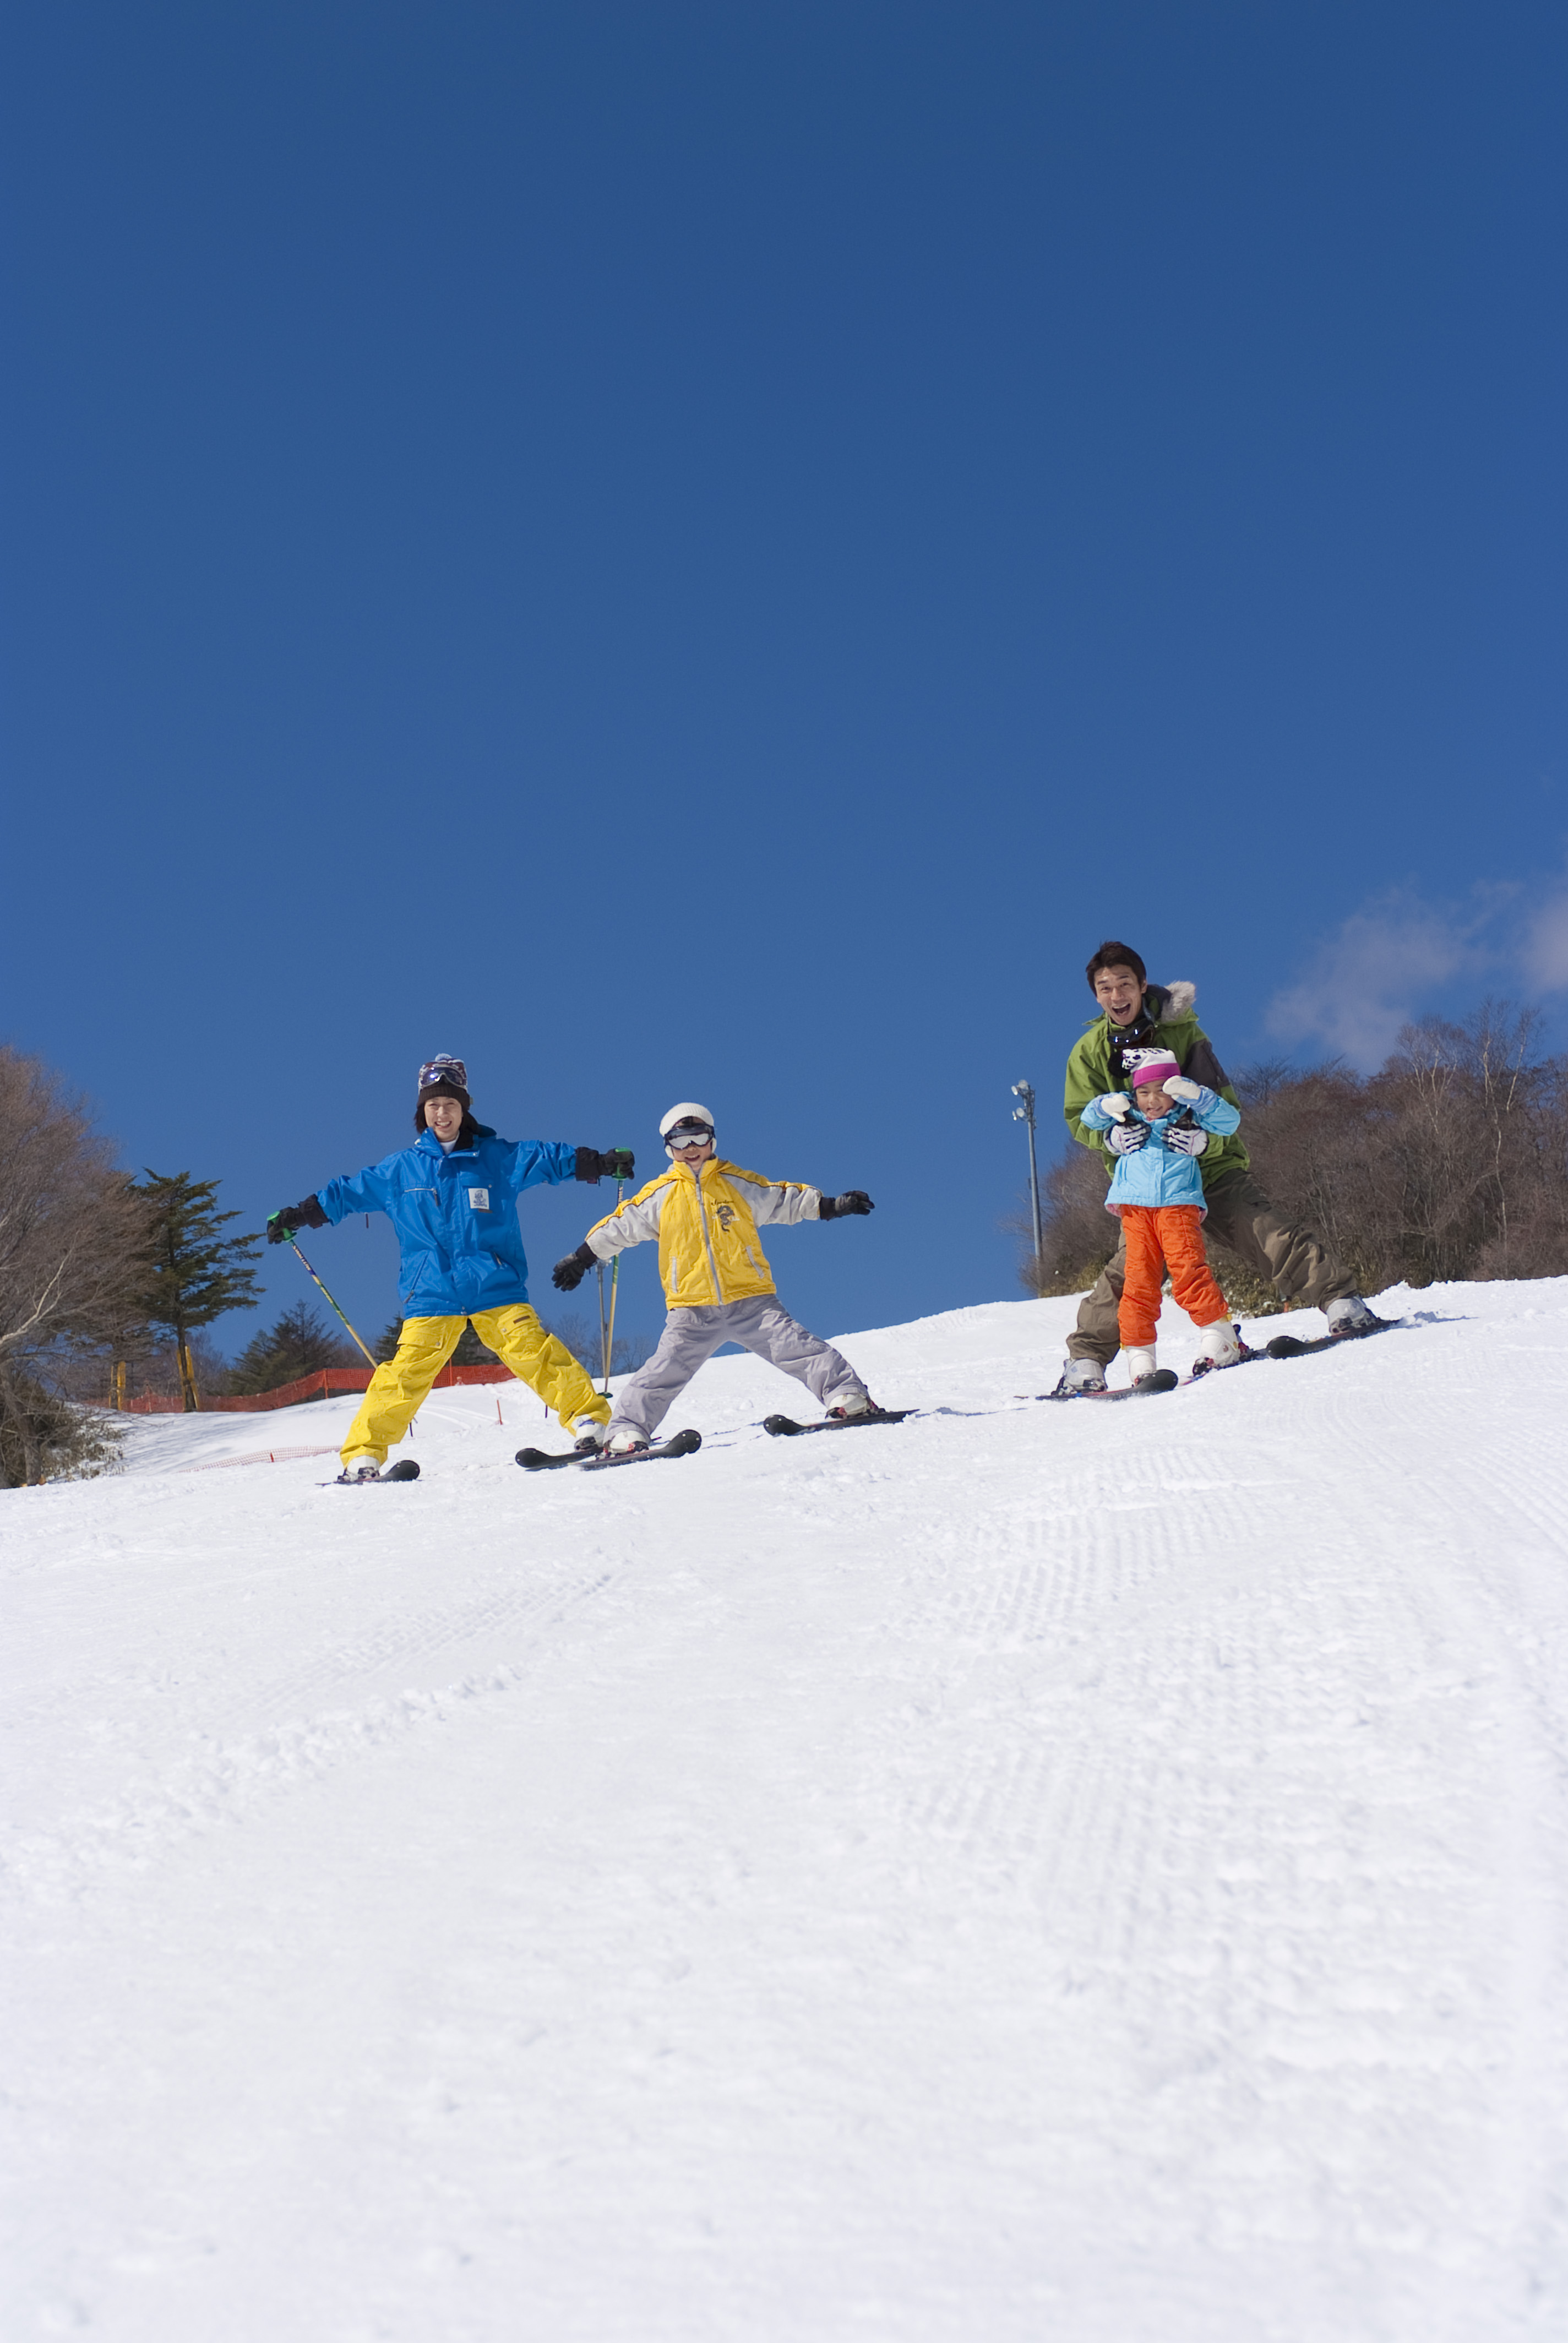 Snow Town Yeti Ski Trip with Round-trip Transfers for Mount Fuji from Tokyo